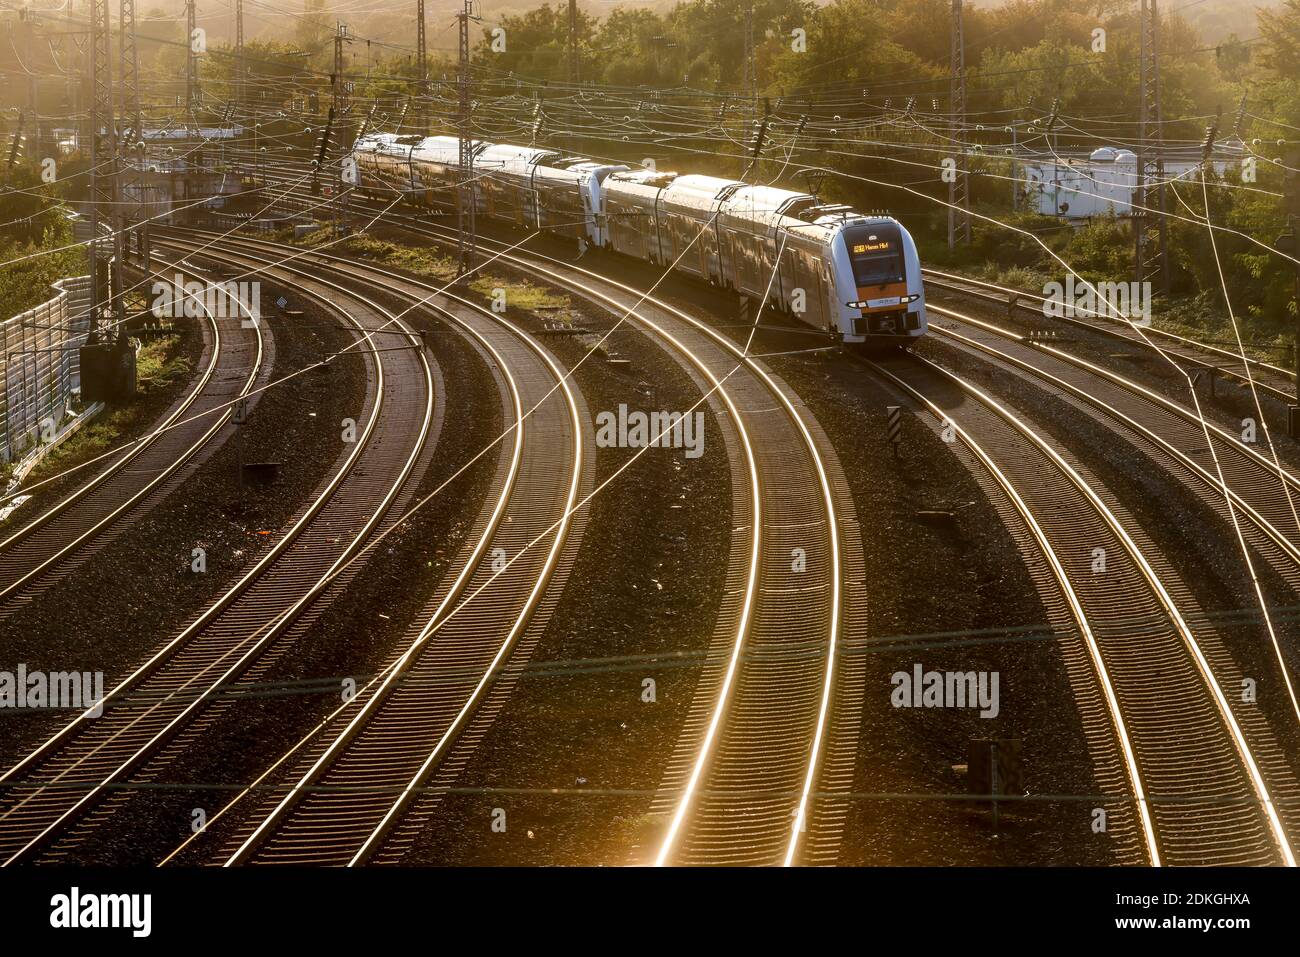 Essen, Ruhr area, North Rhine-Westphalia, Germany - train tracks in the backlight of the evening sun, RRX train to Hamm. Stock Photo